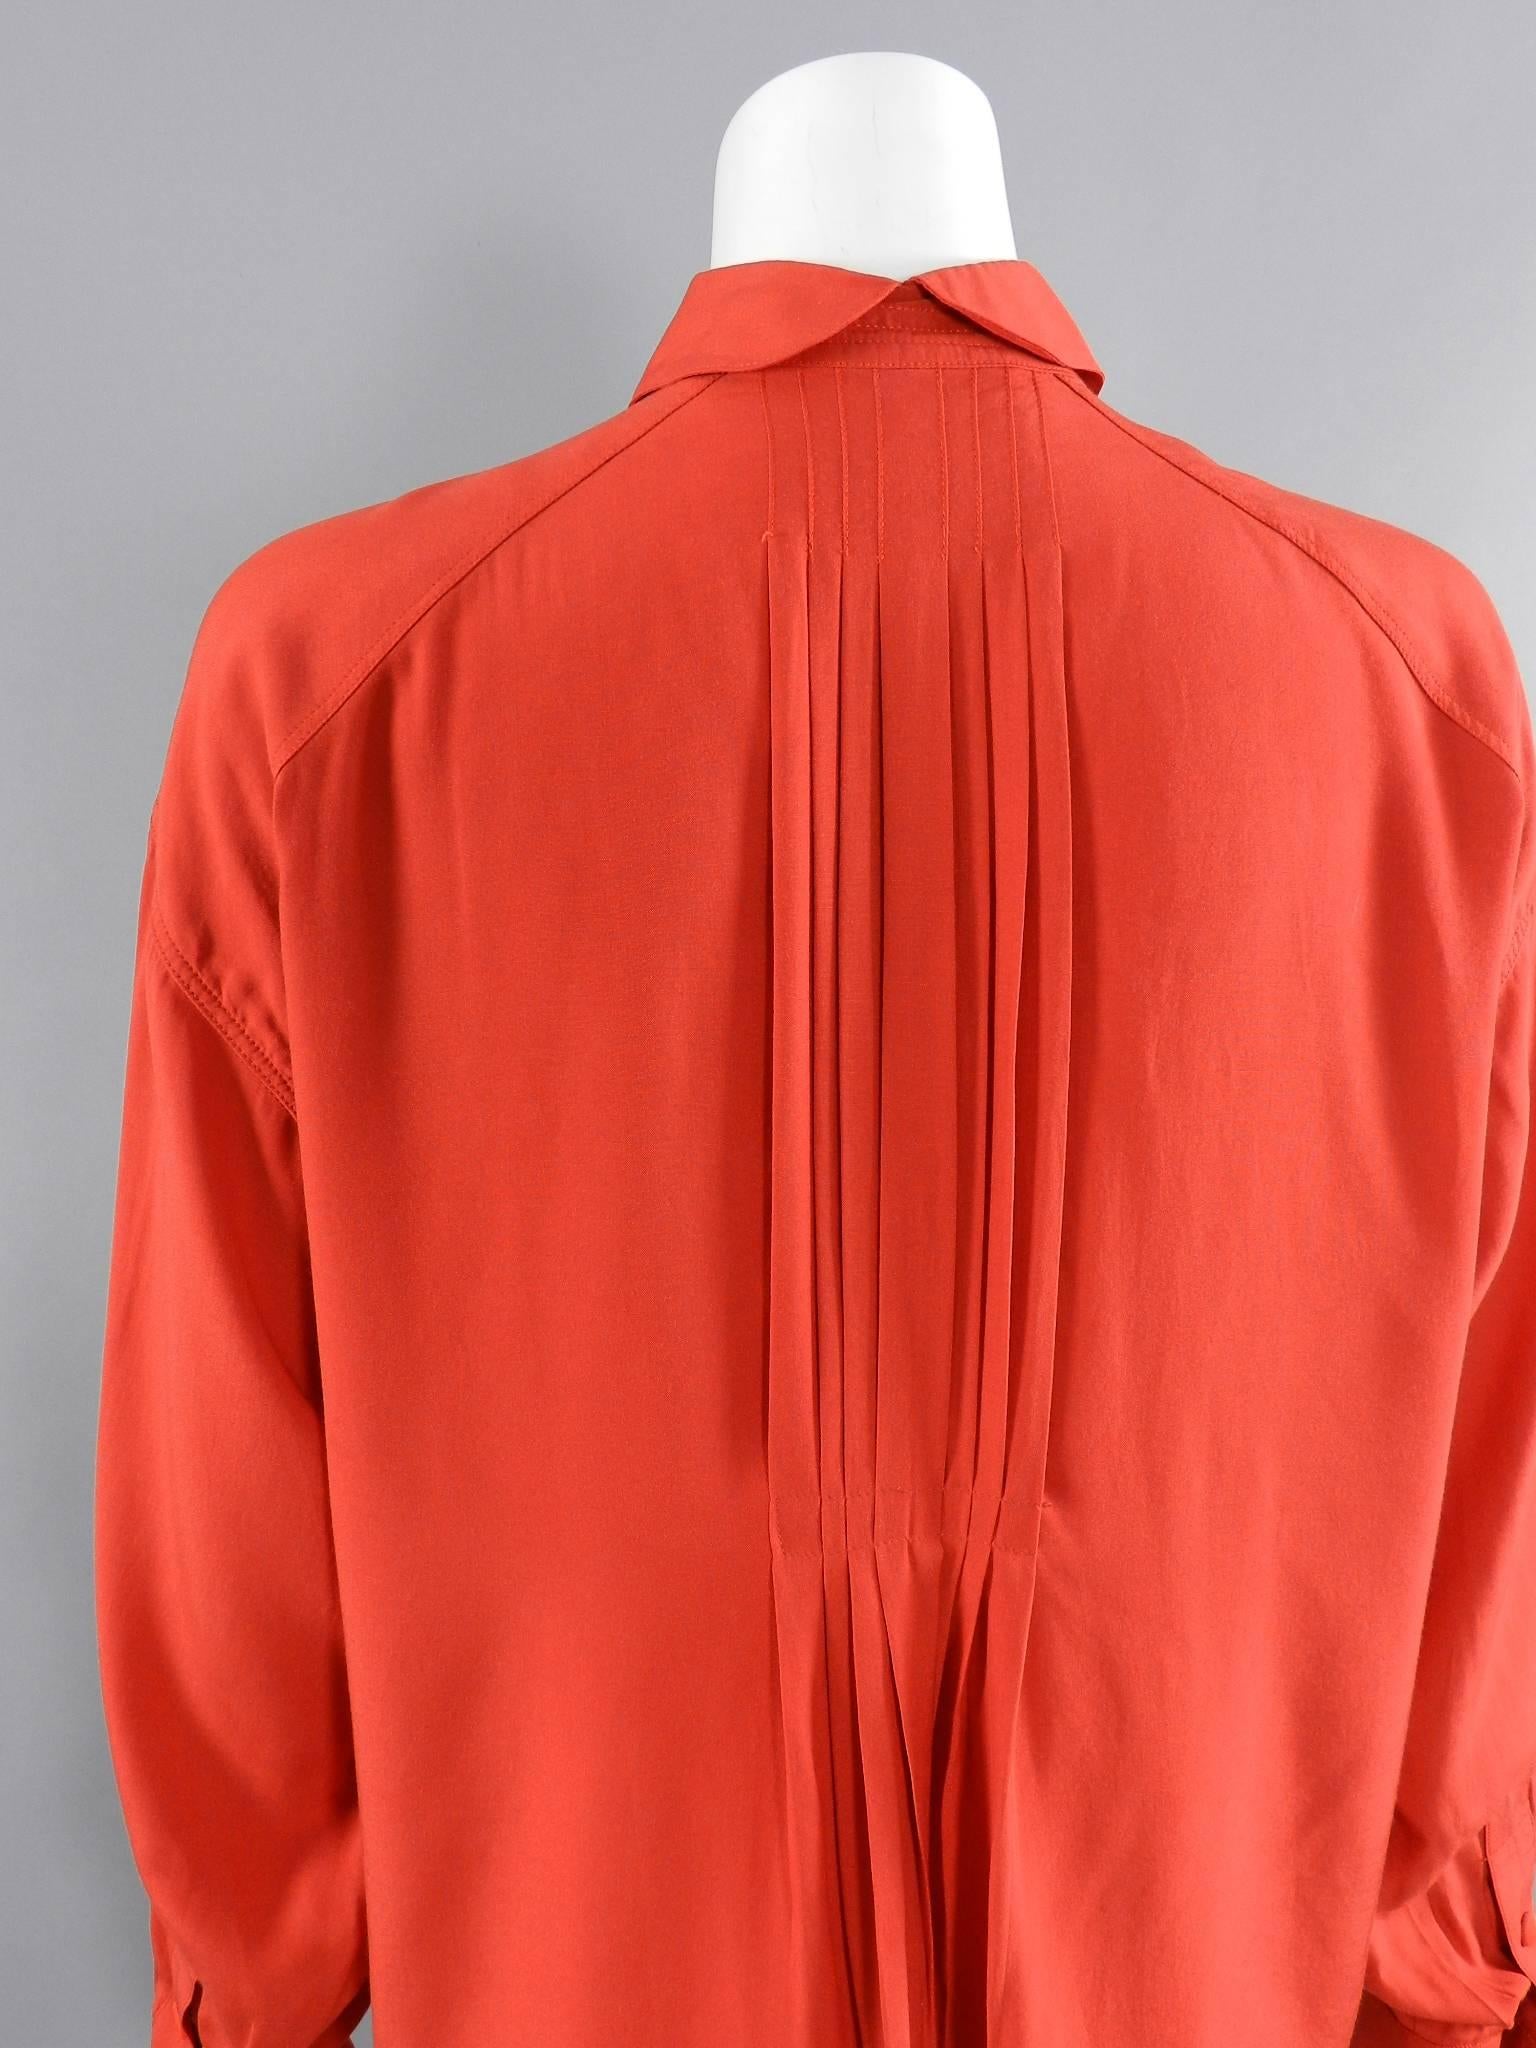 Claude Montana 1980's Orange Shirt with String Collar 1